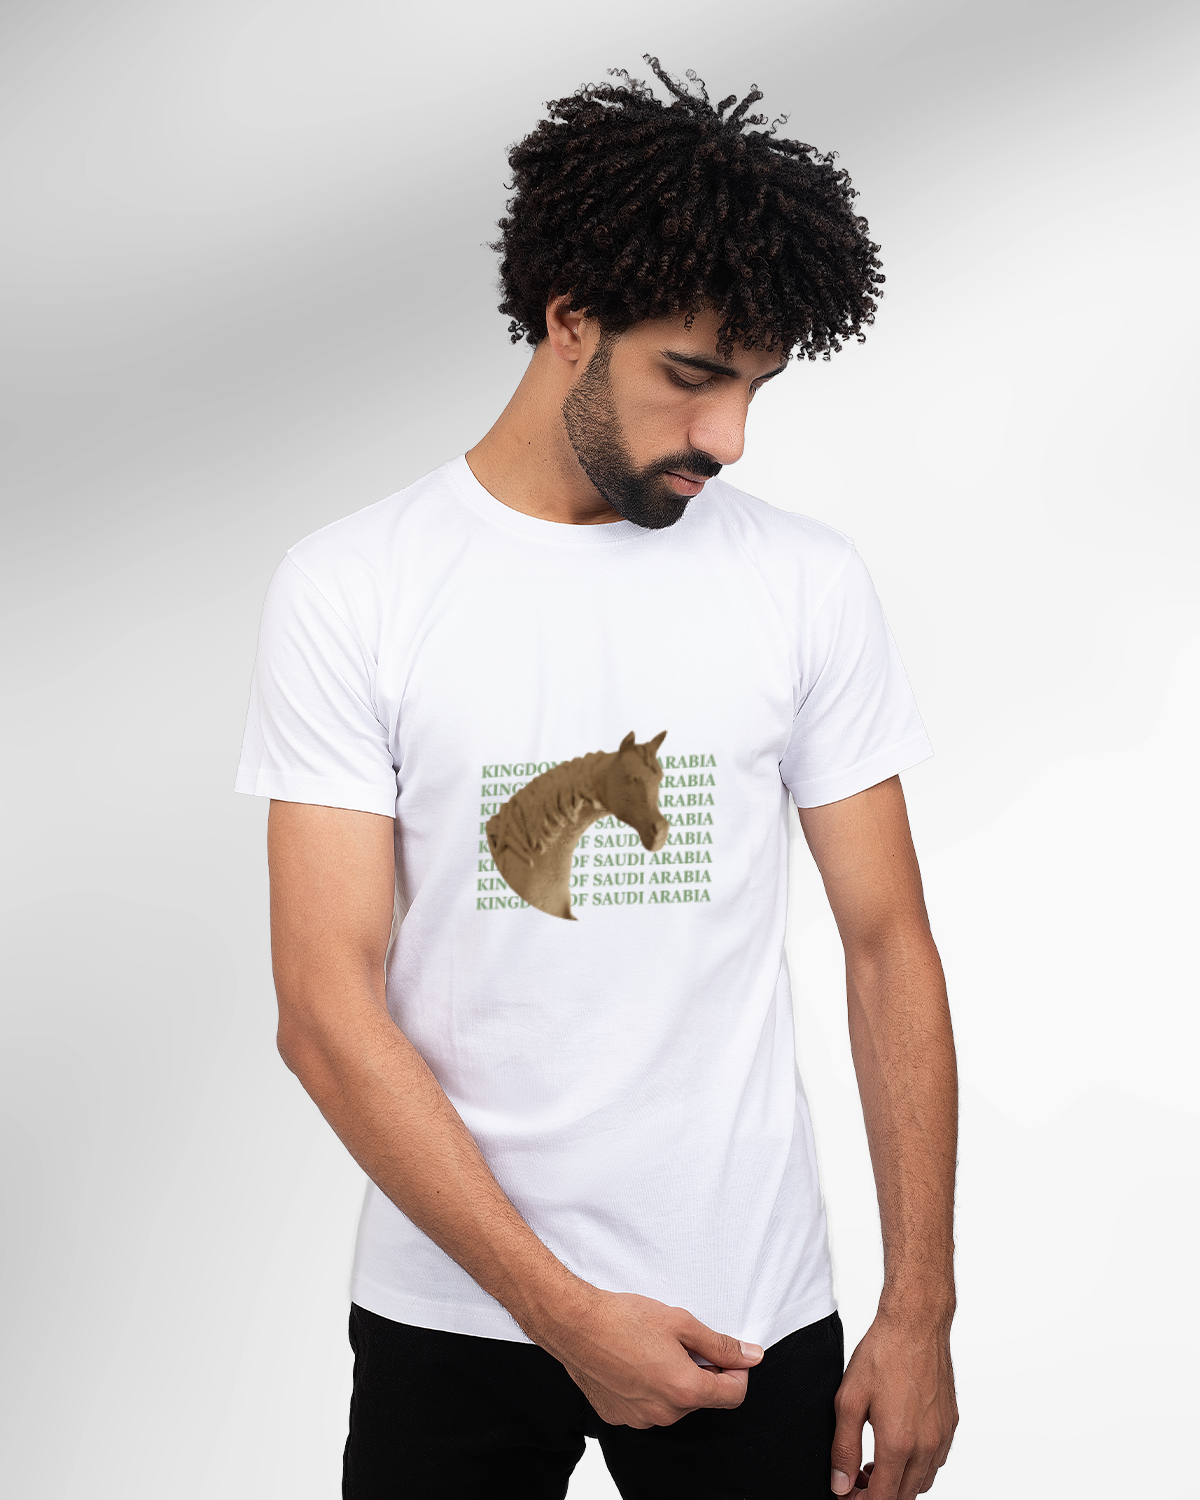 Men's Foundation Day T-shirt (Horse)